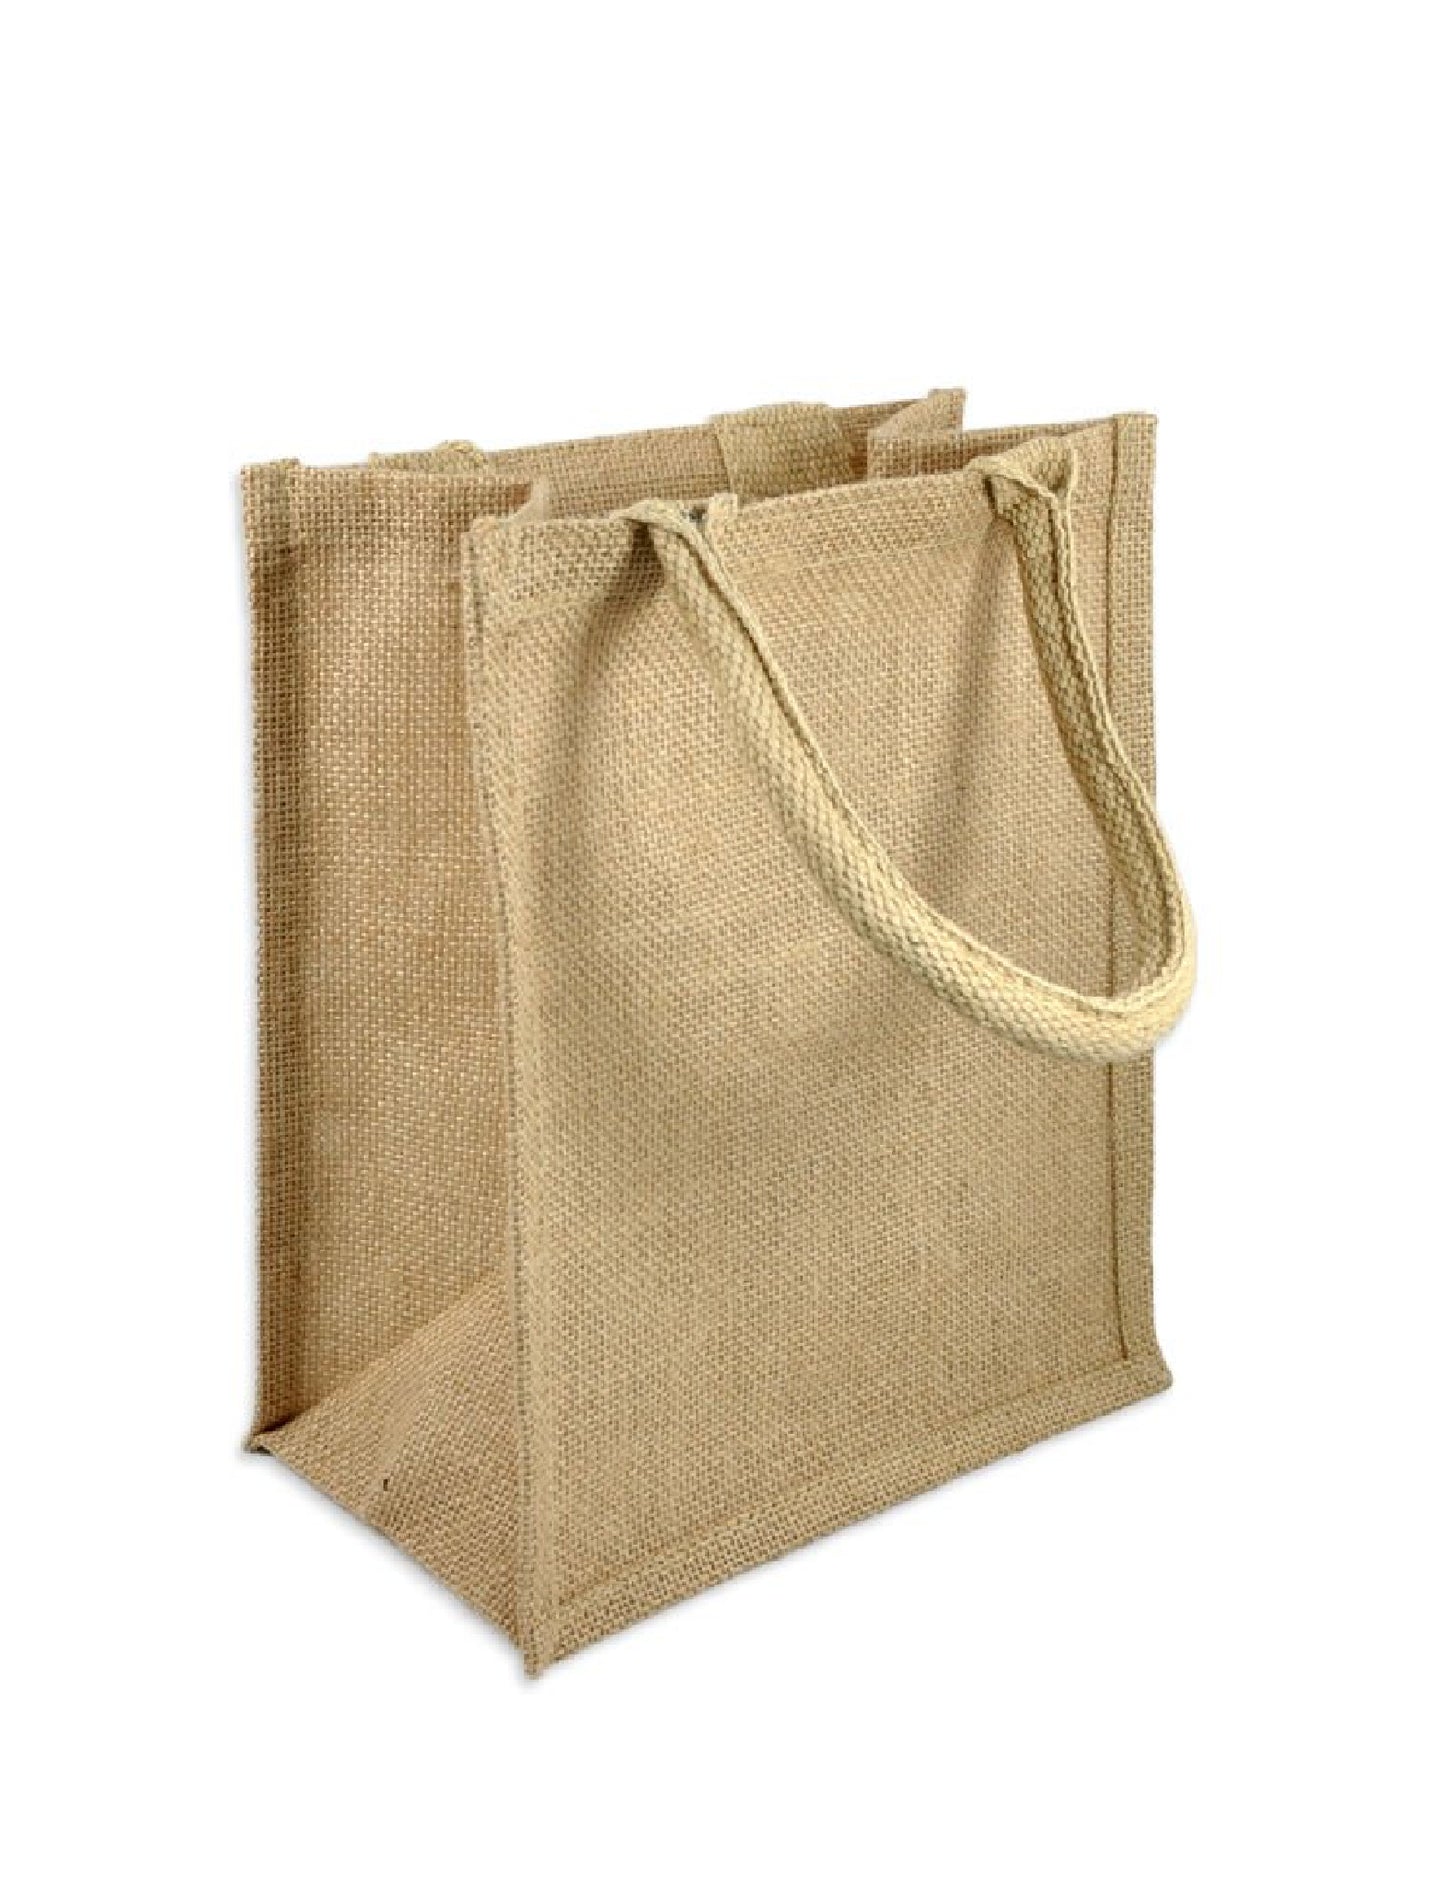 Small Size Burlap Jute Tote Bags, Natural Rustic Gifts